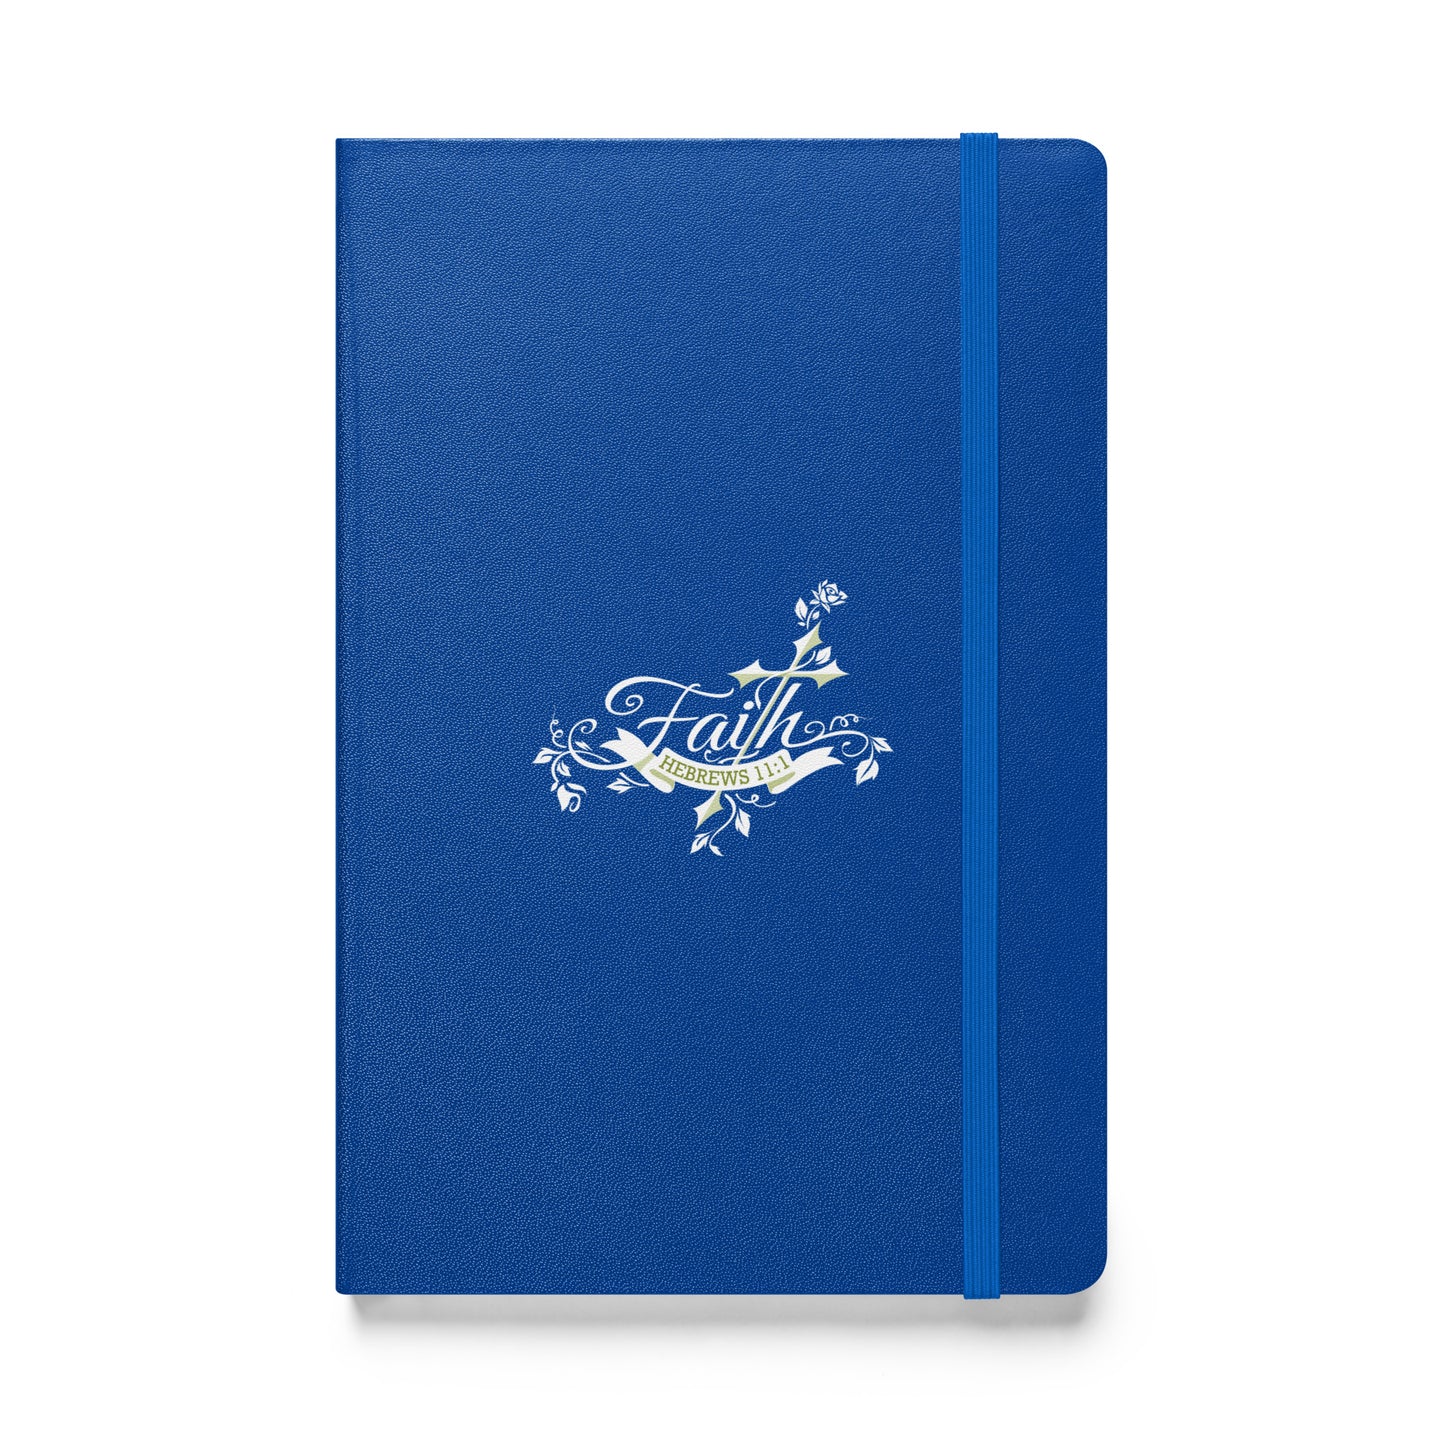 Faith - Hardcover bound notebook